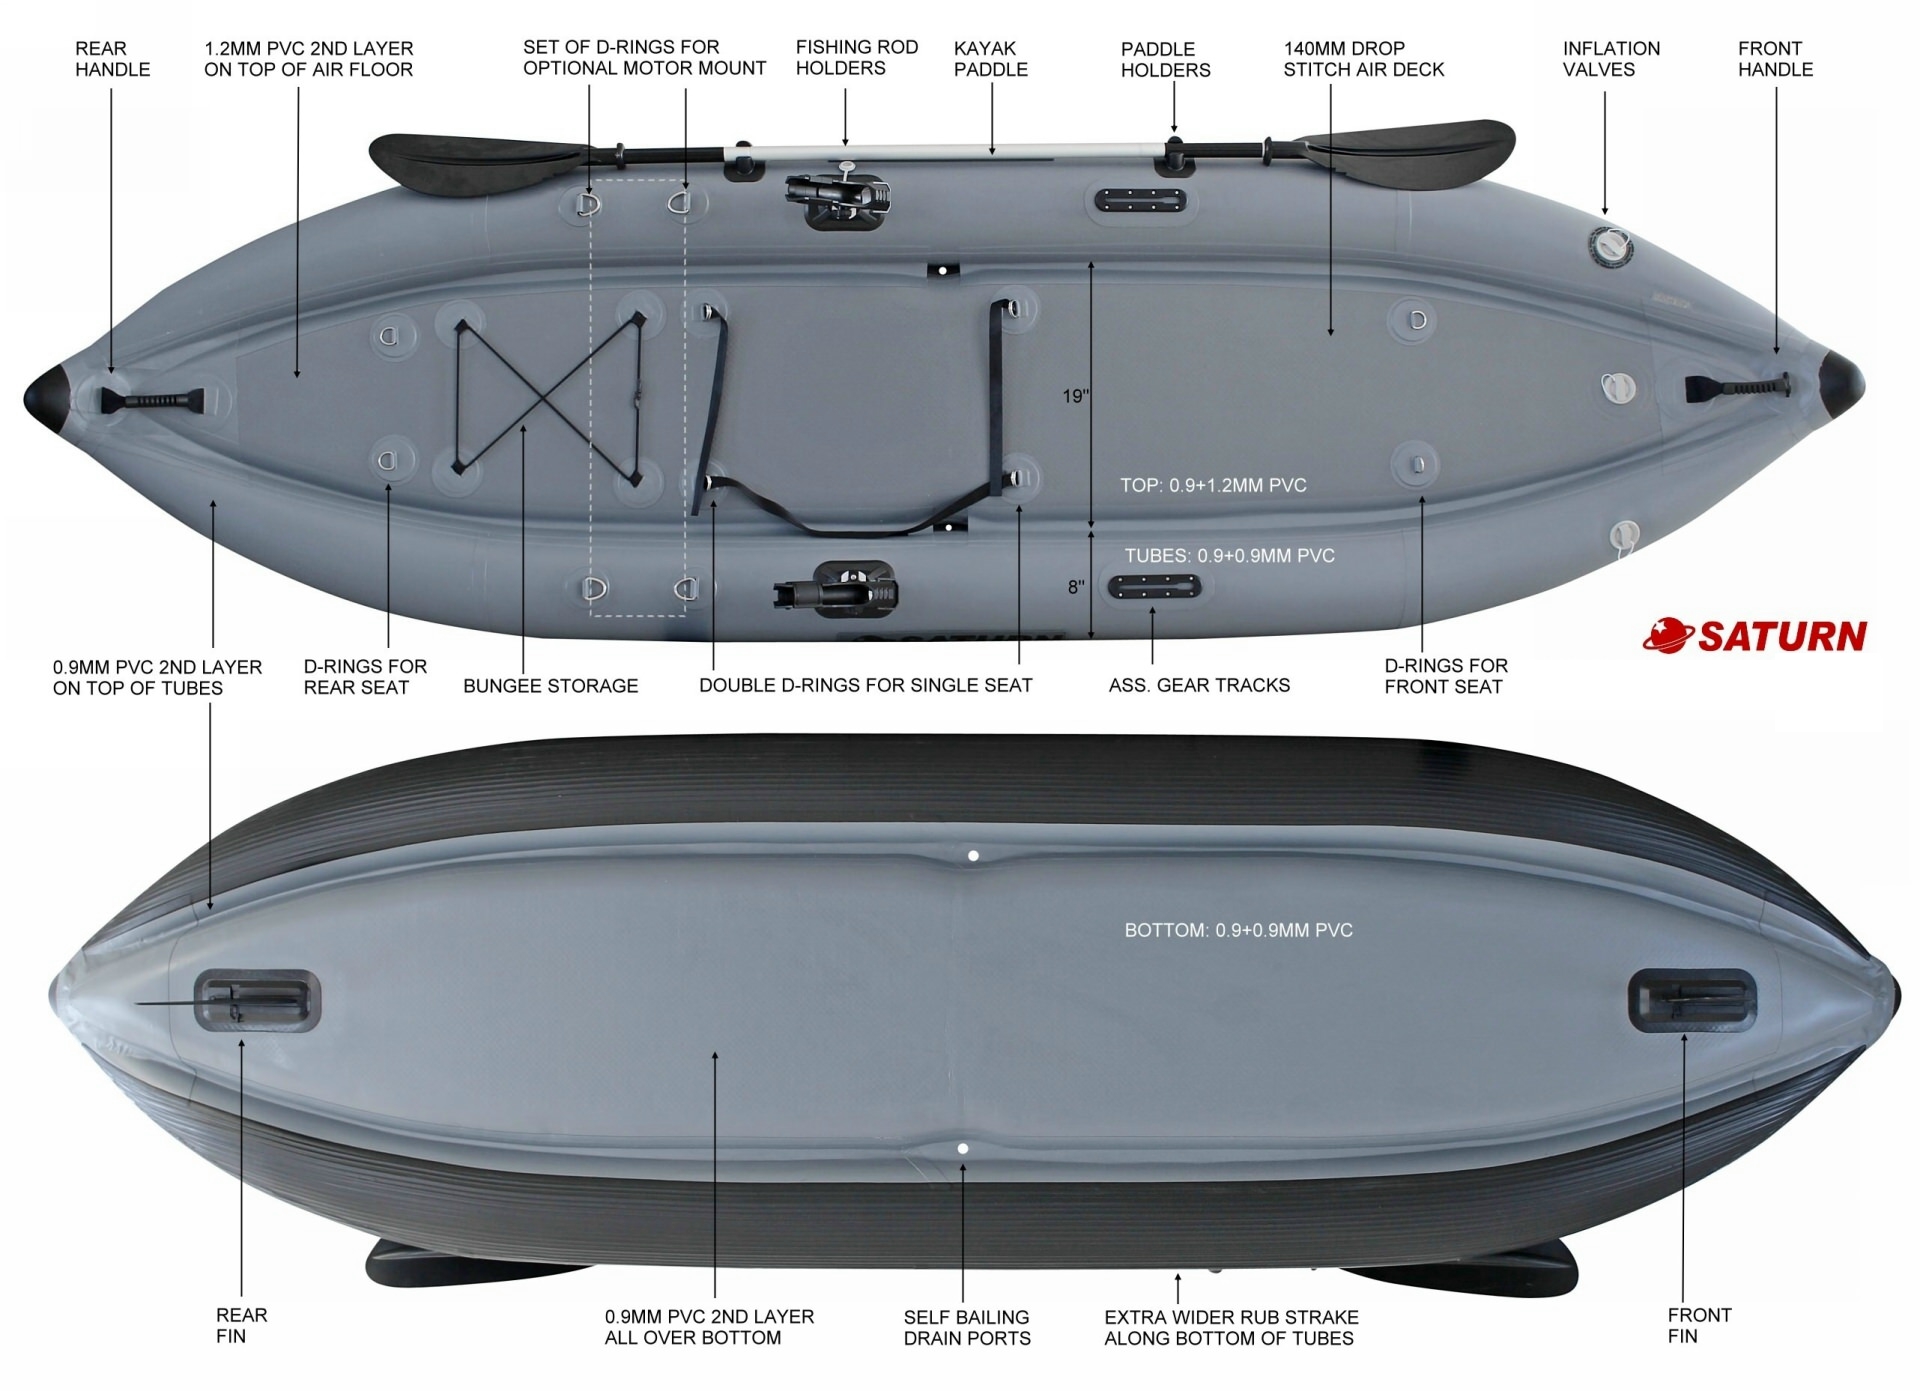 Saturn Extra Heavy-Duty Fishing Inflatable Kayak FIK365 Tech Specs.